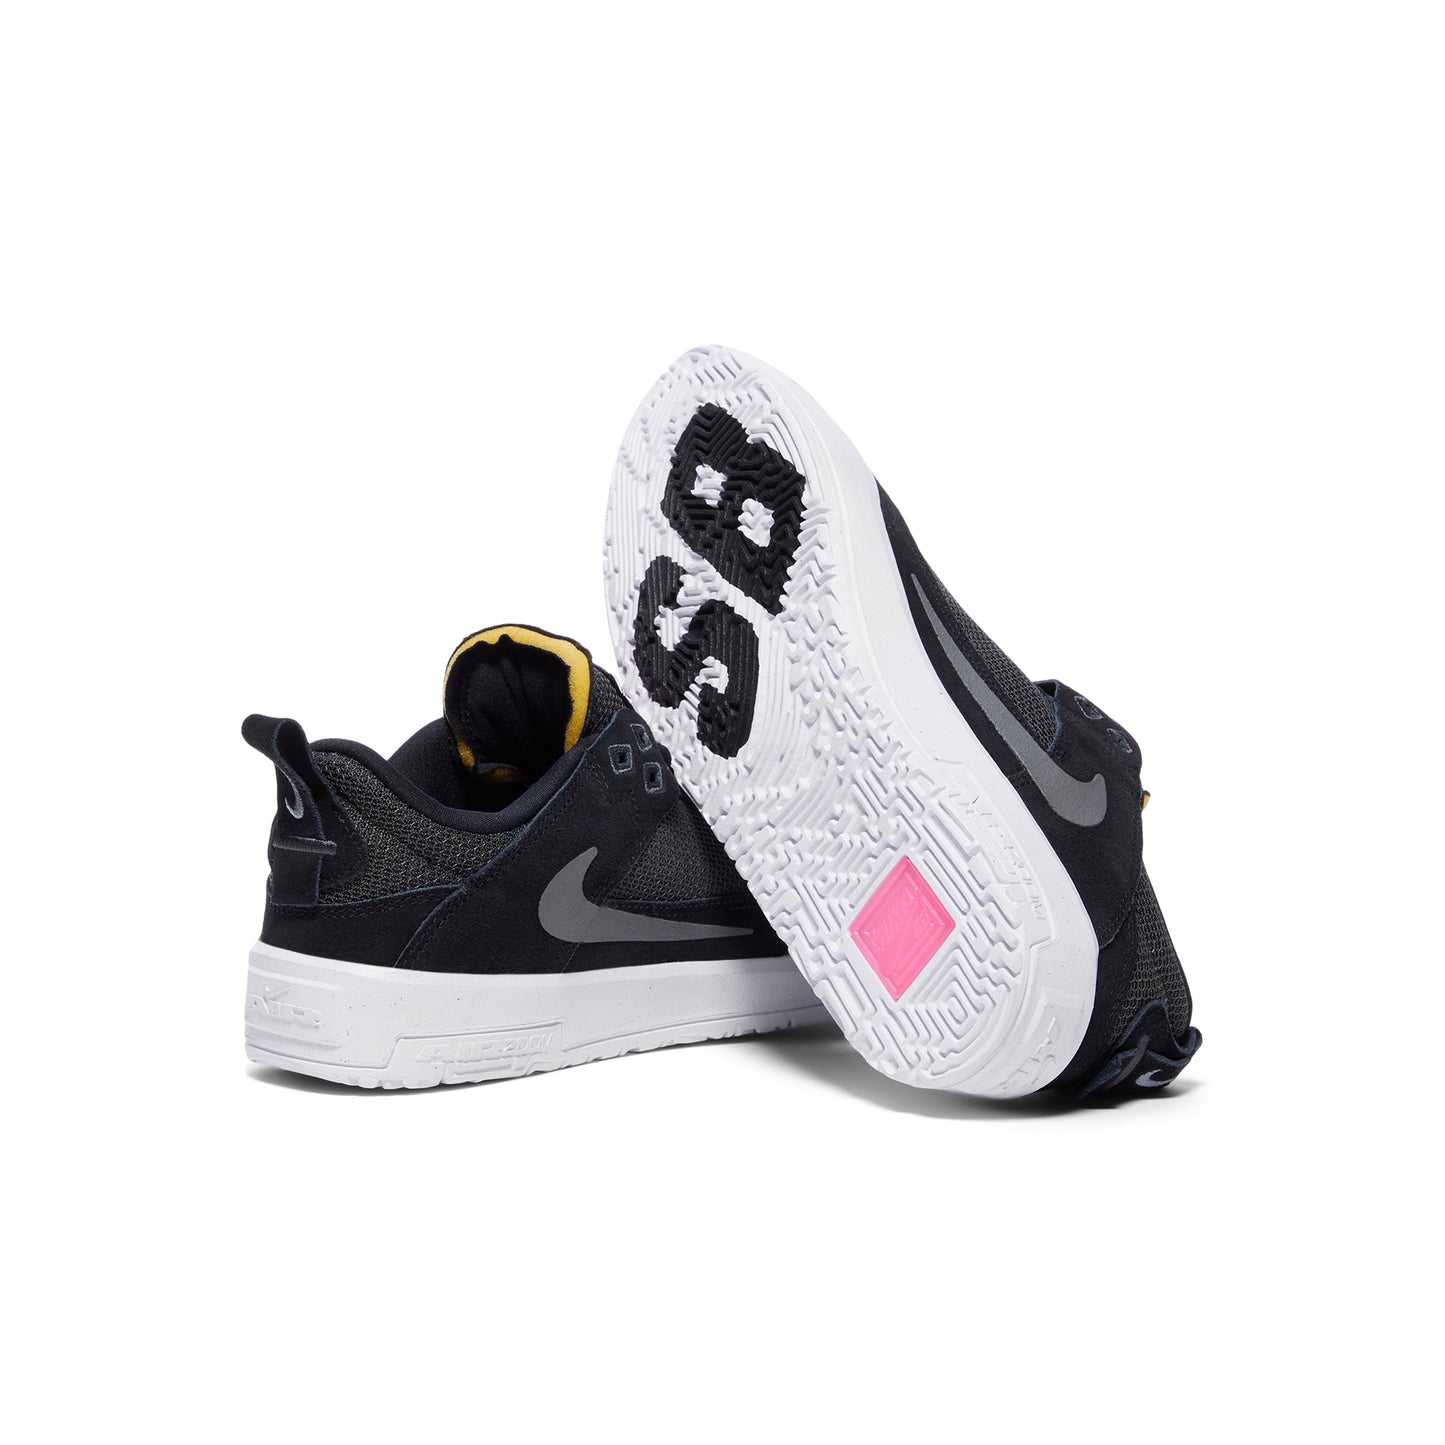 Nike kids SB Burnside (Black/Cool Grey/Anthracite)